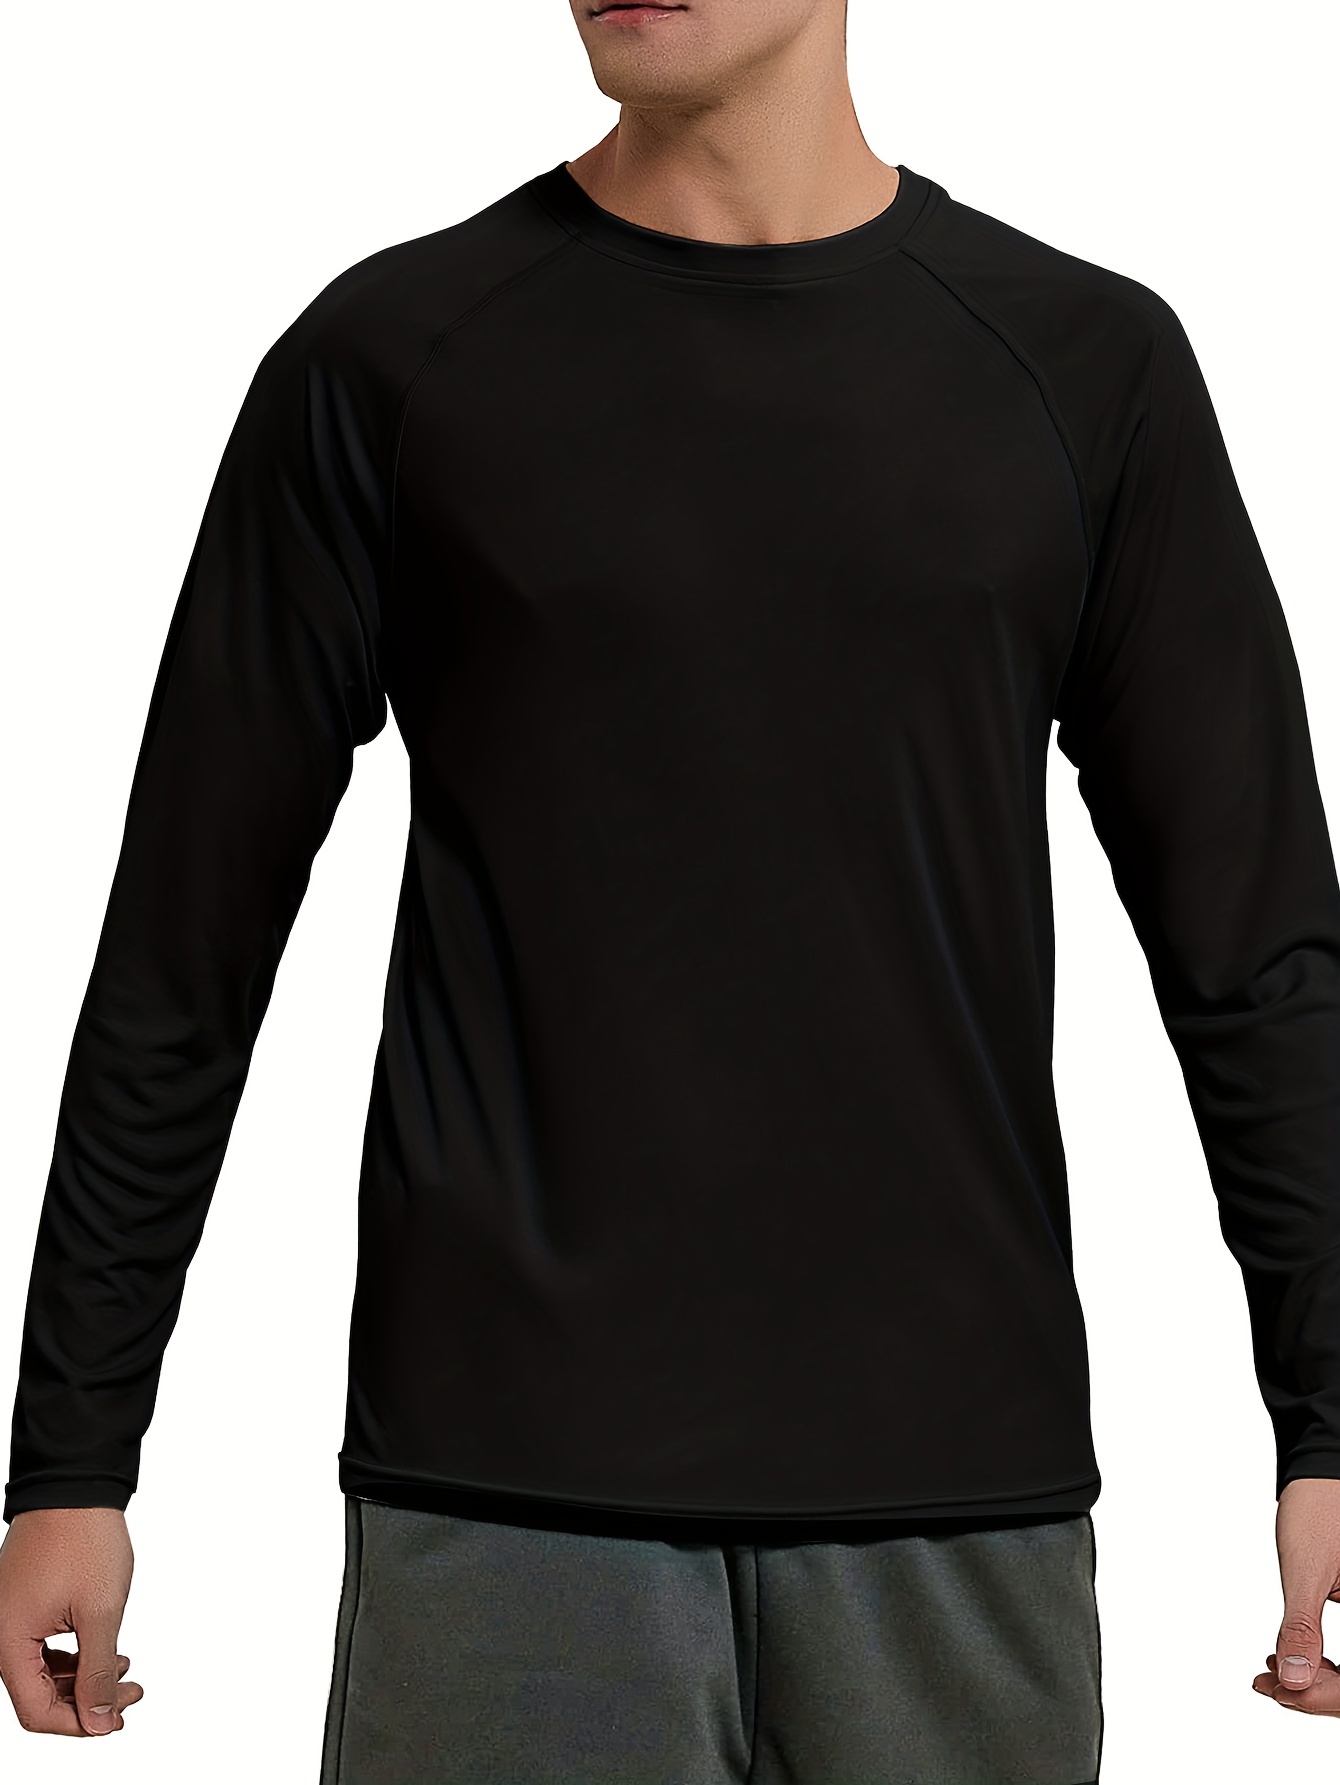 Fishing Shirt – Black Long Sleeve